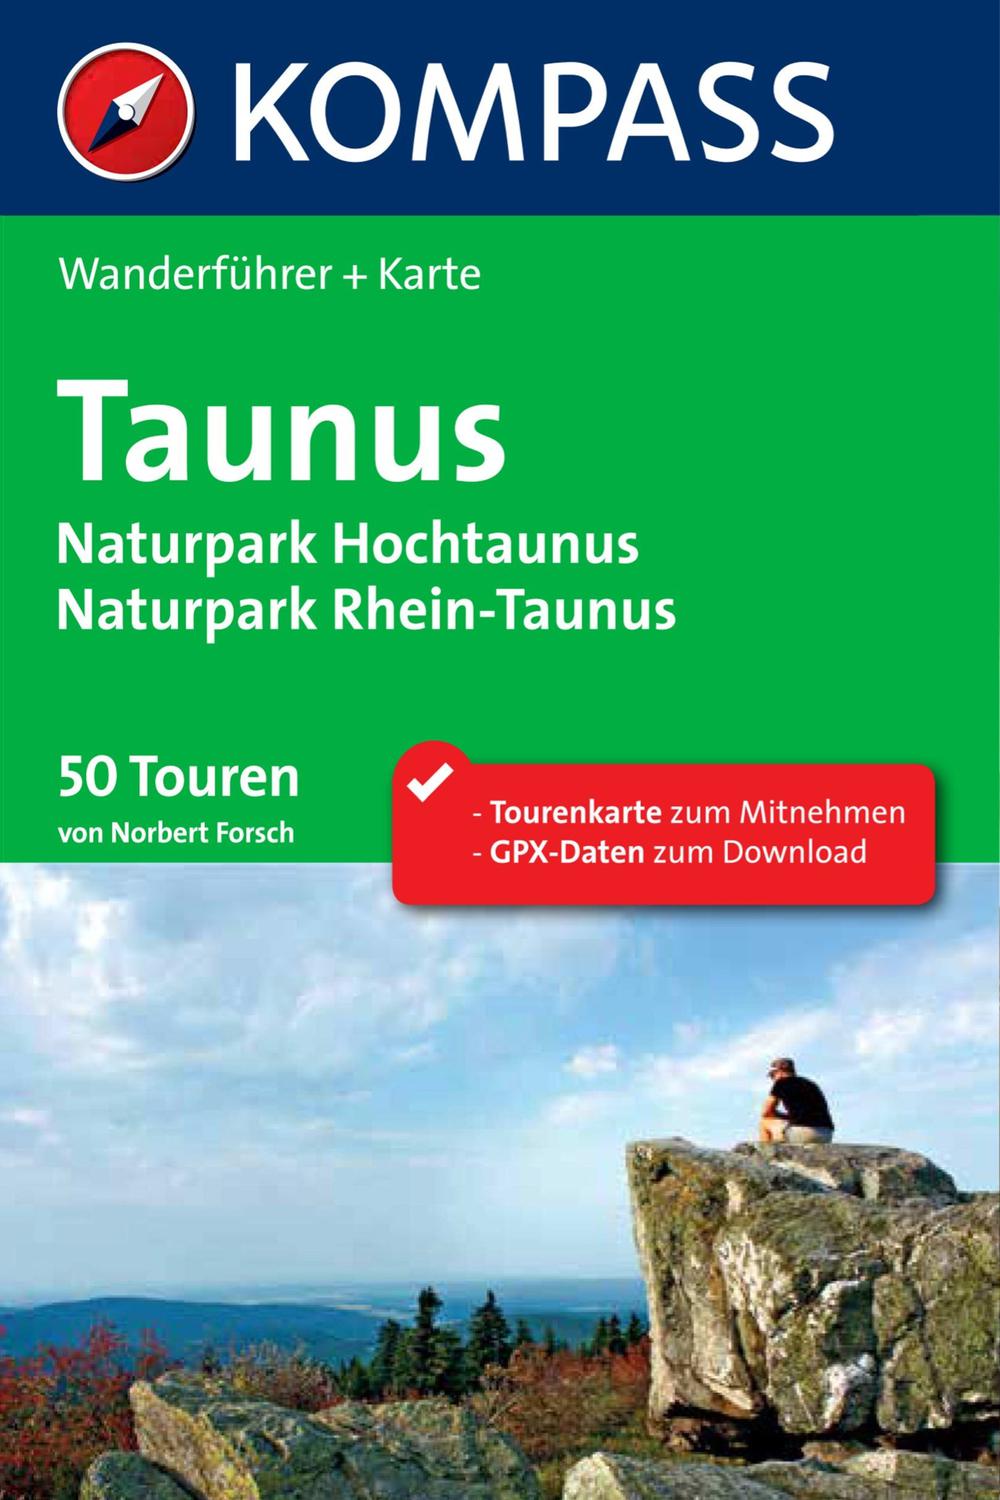 Kompass Wanderführer Taunus, Naturpark Hochtaunus, Naturpark Rhein-Taunus